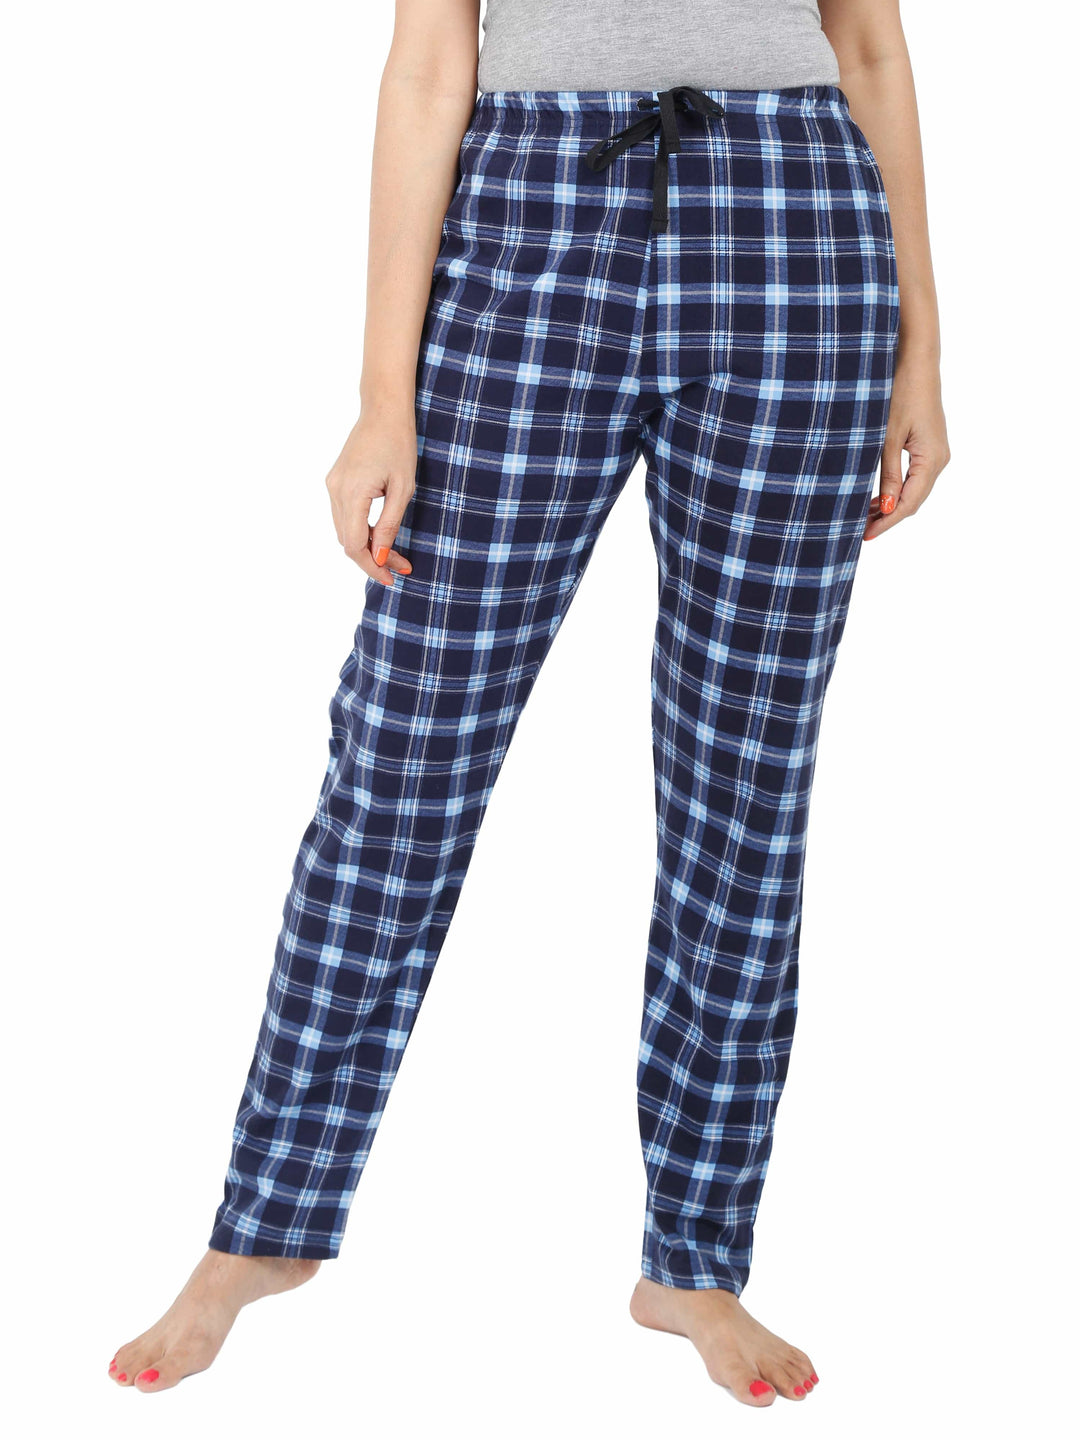  Pyjama  Printed Cotton Pyjama Lower Night Pants with Pockets- 9shines label 